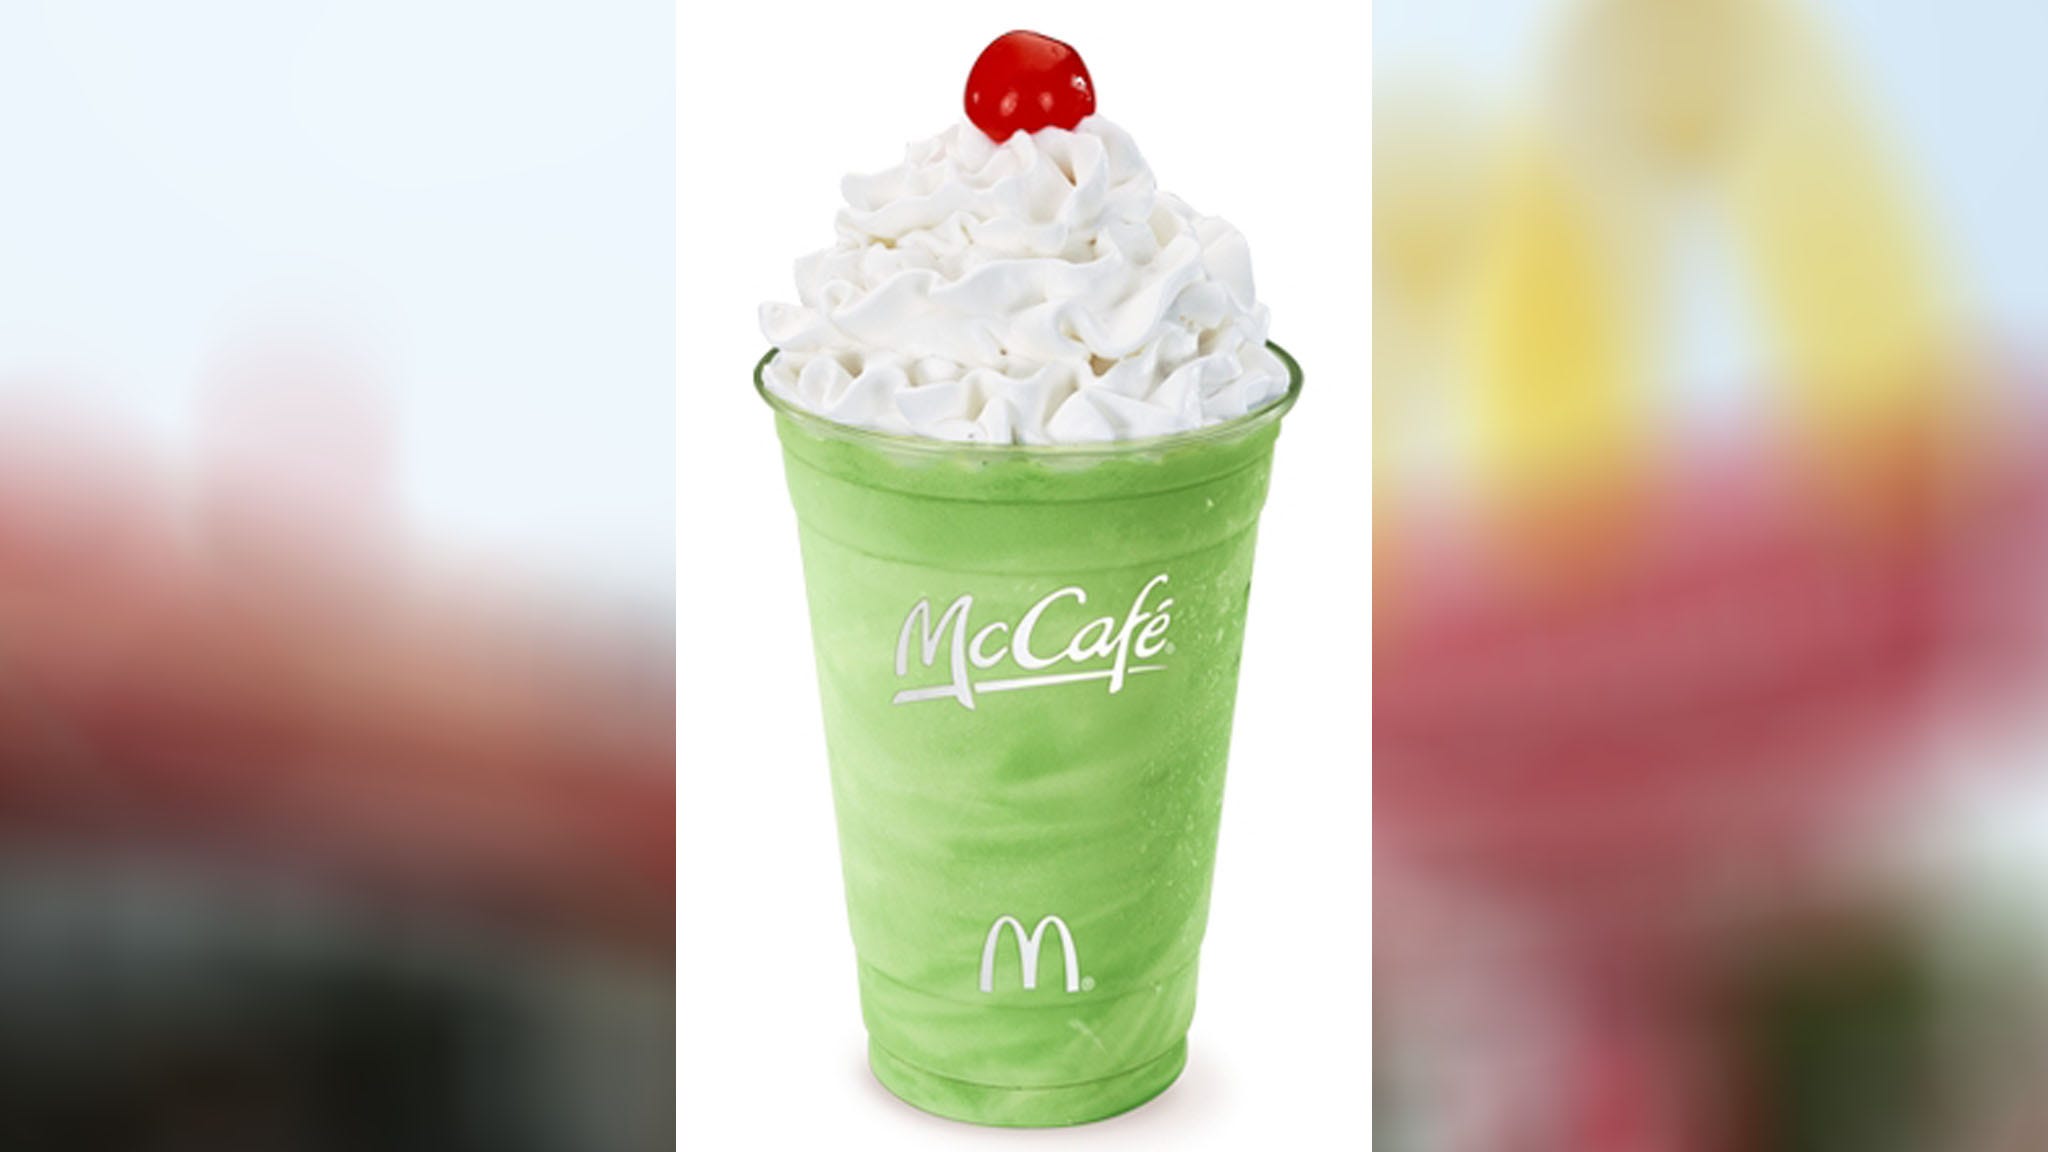 McDonald's Shamrock Shake is back ahead of St. Patrick's Day